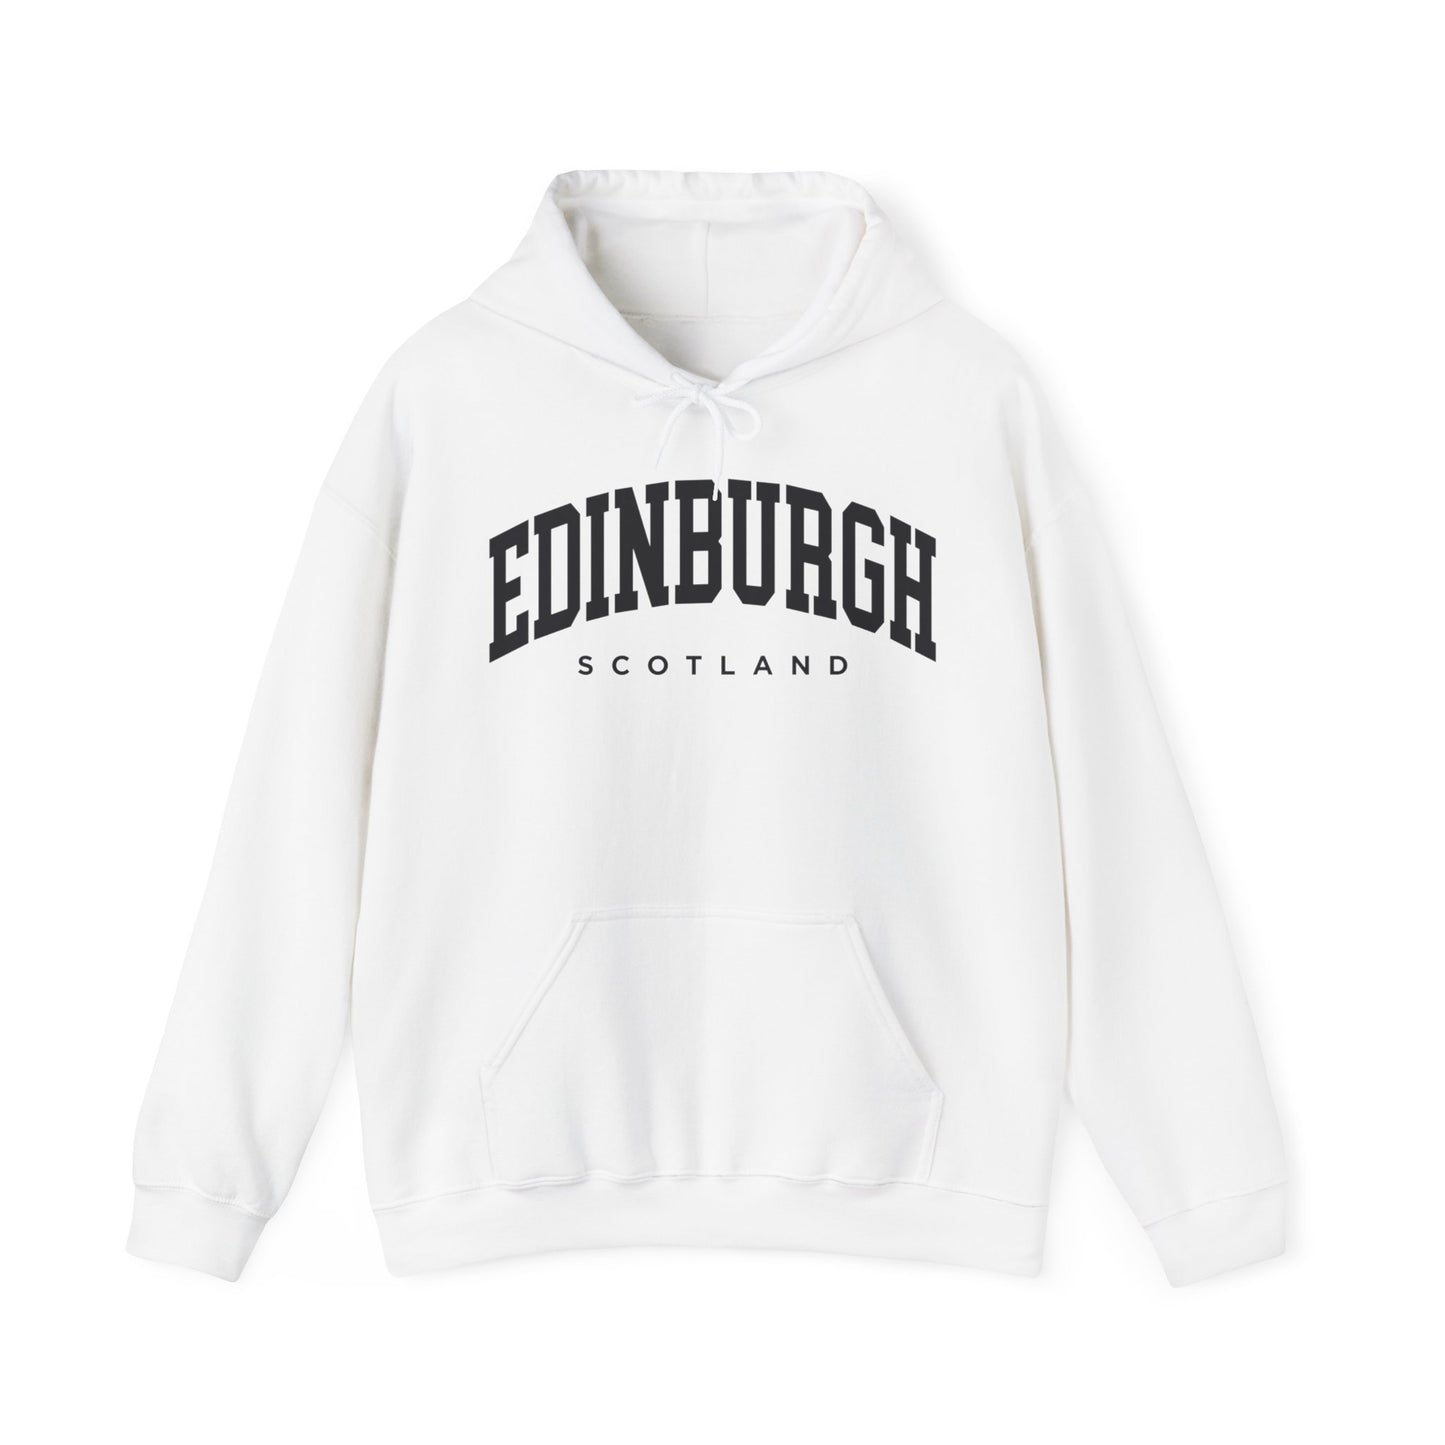 Edinburgh Scotland Hoodie